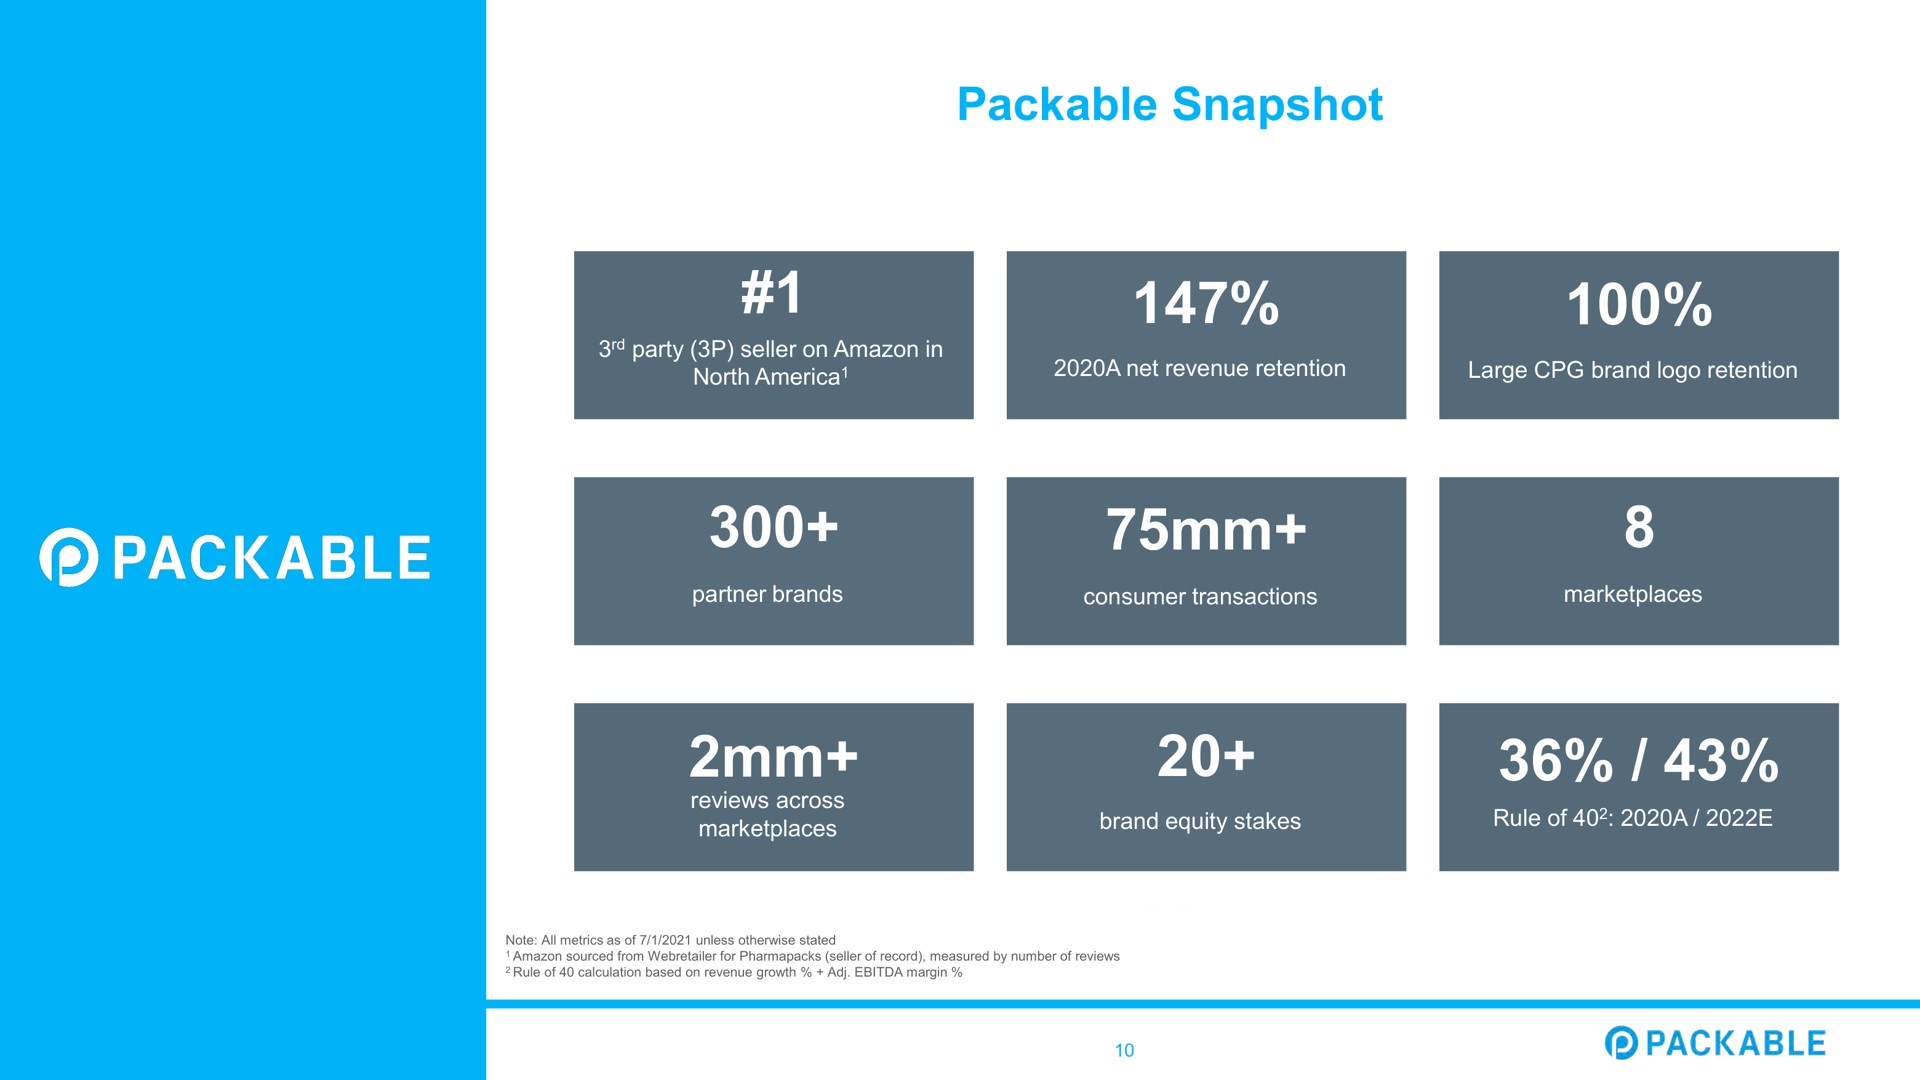 packable snapshot | Packable